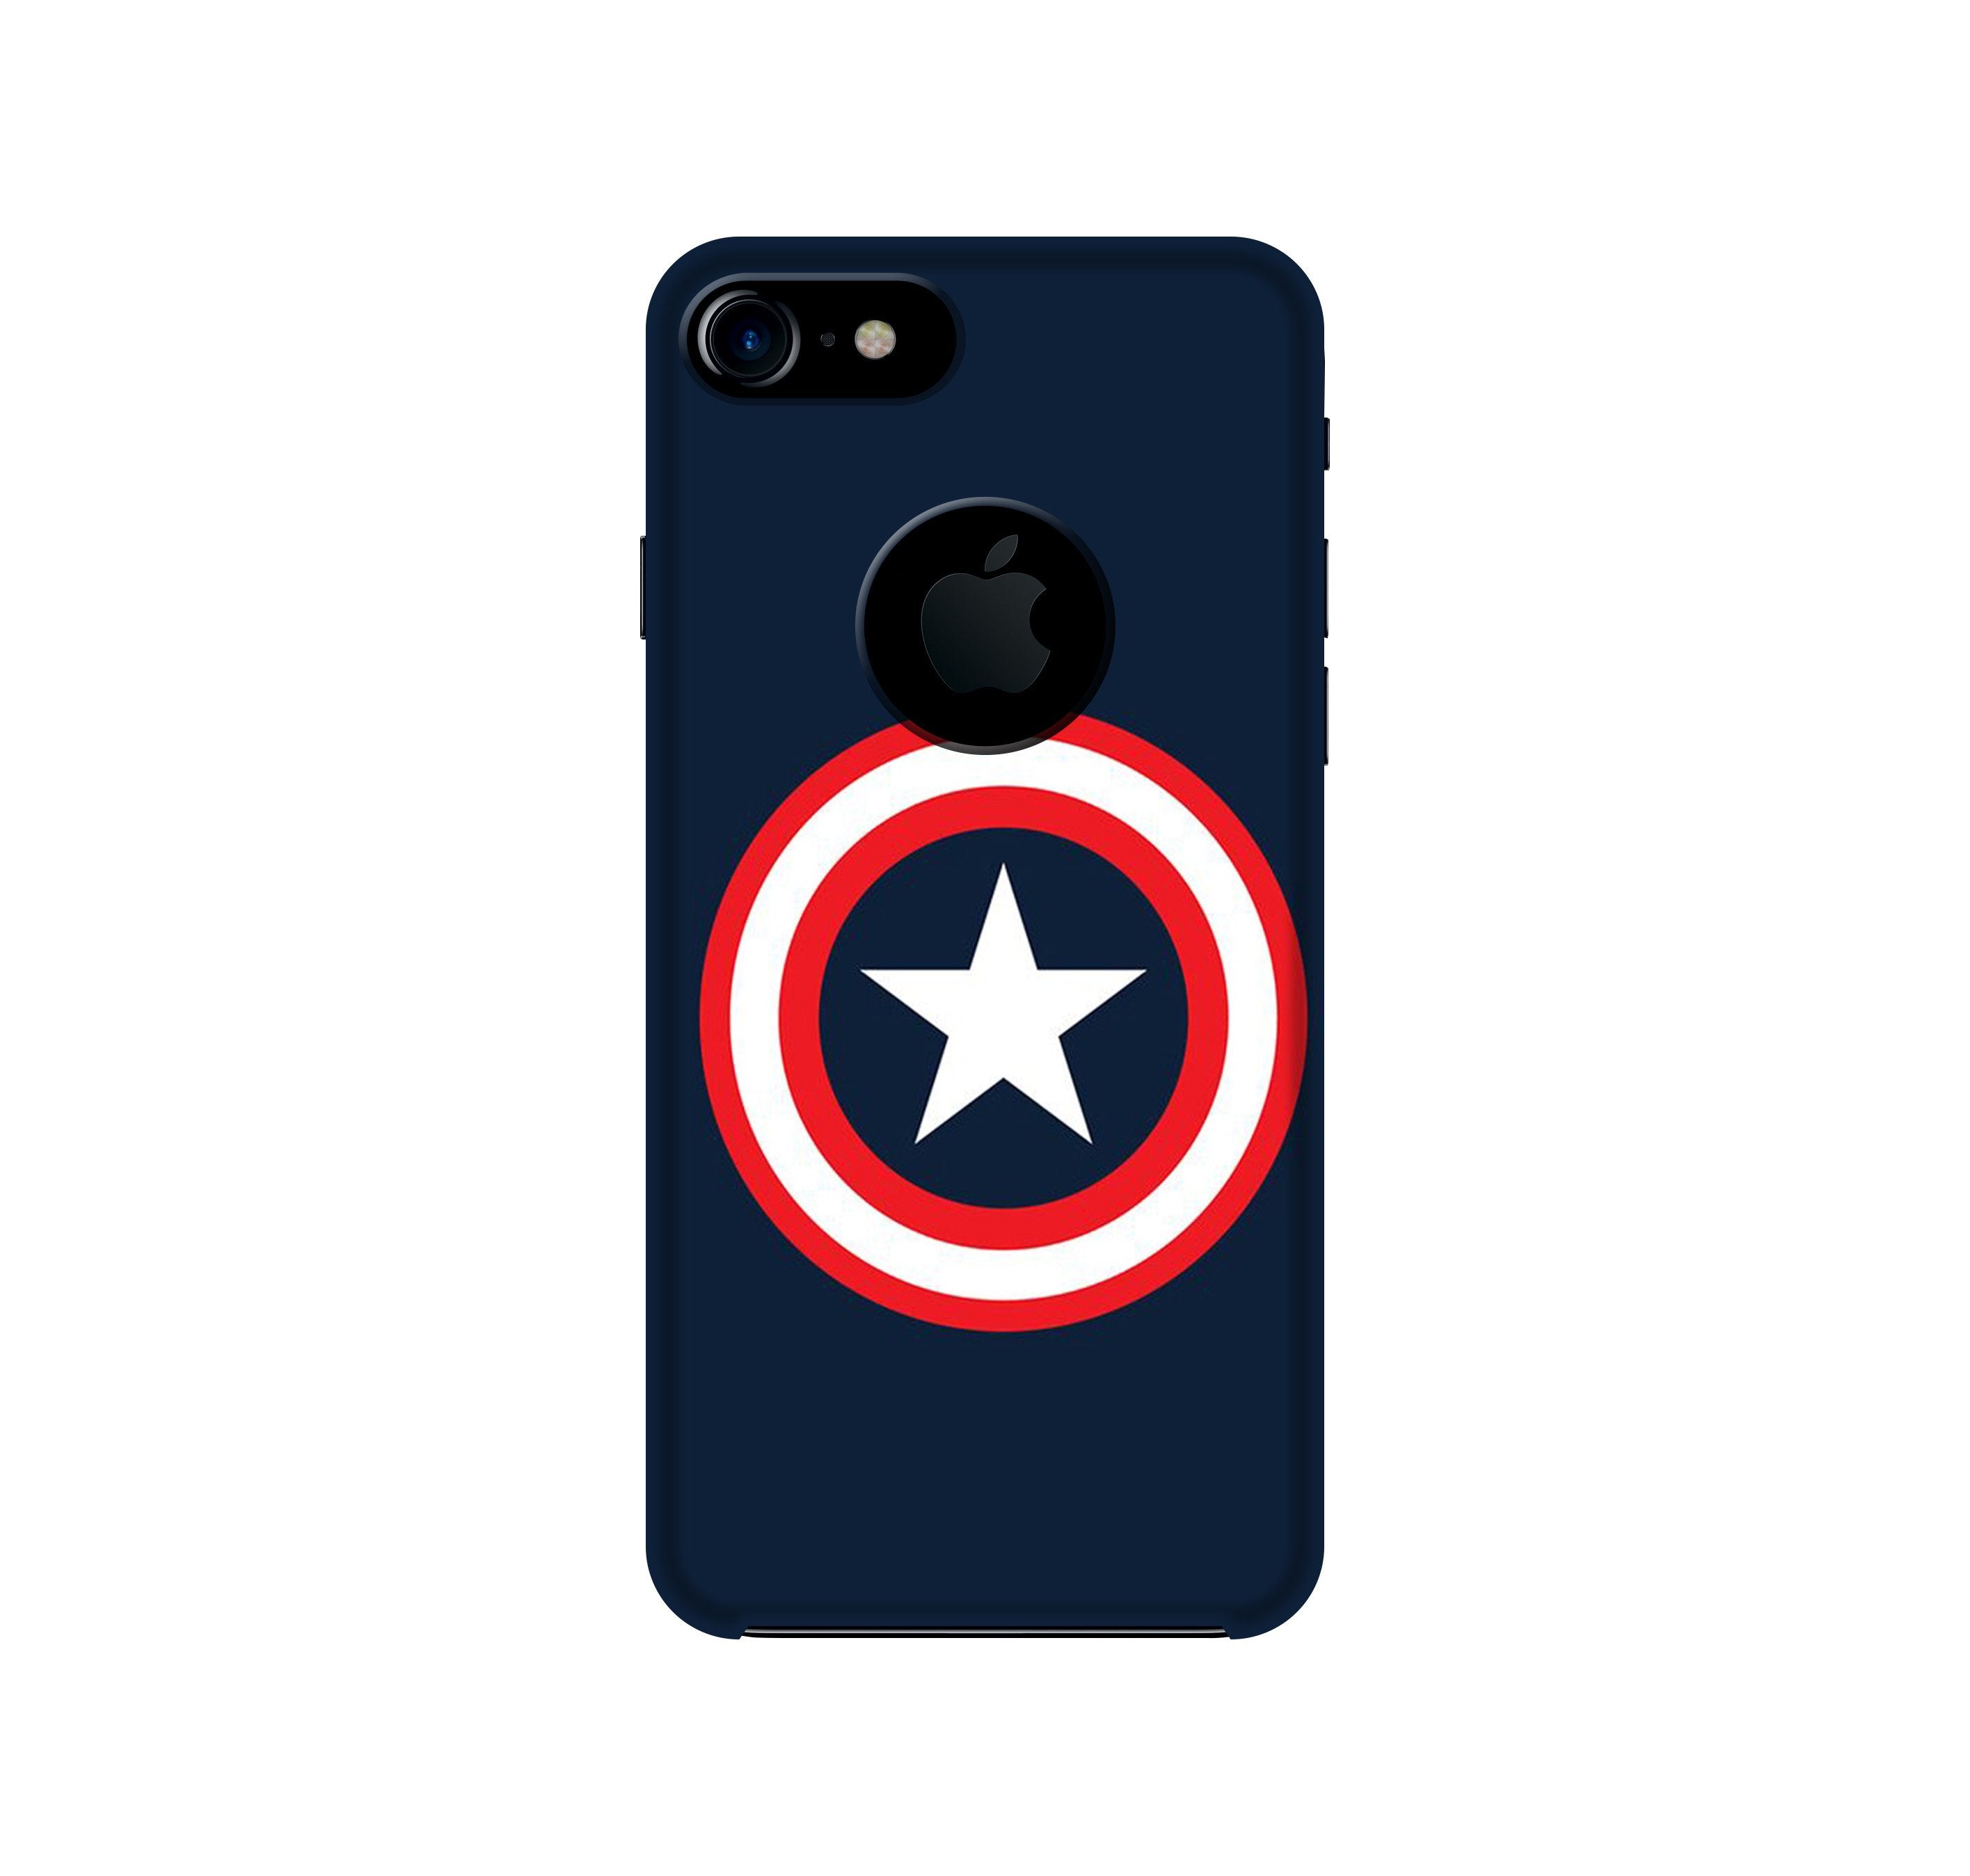 Captain America Case for iPhone 7 logo cut